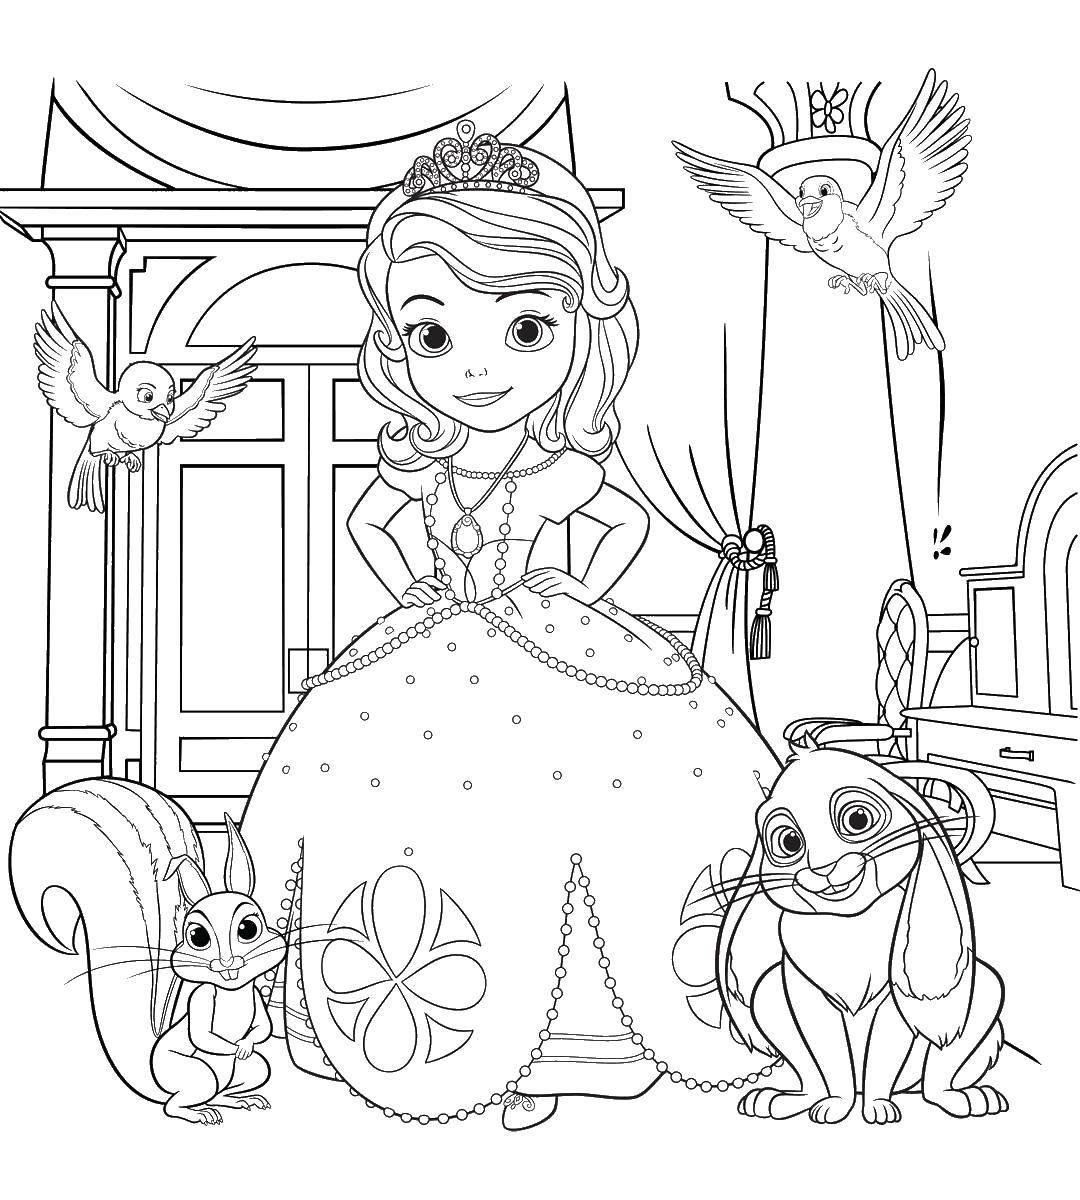 Название: Раскраска Принцесса. Категория: Персонажи из сказок. Теги: принцесса, платье, кролик, белка.